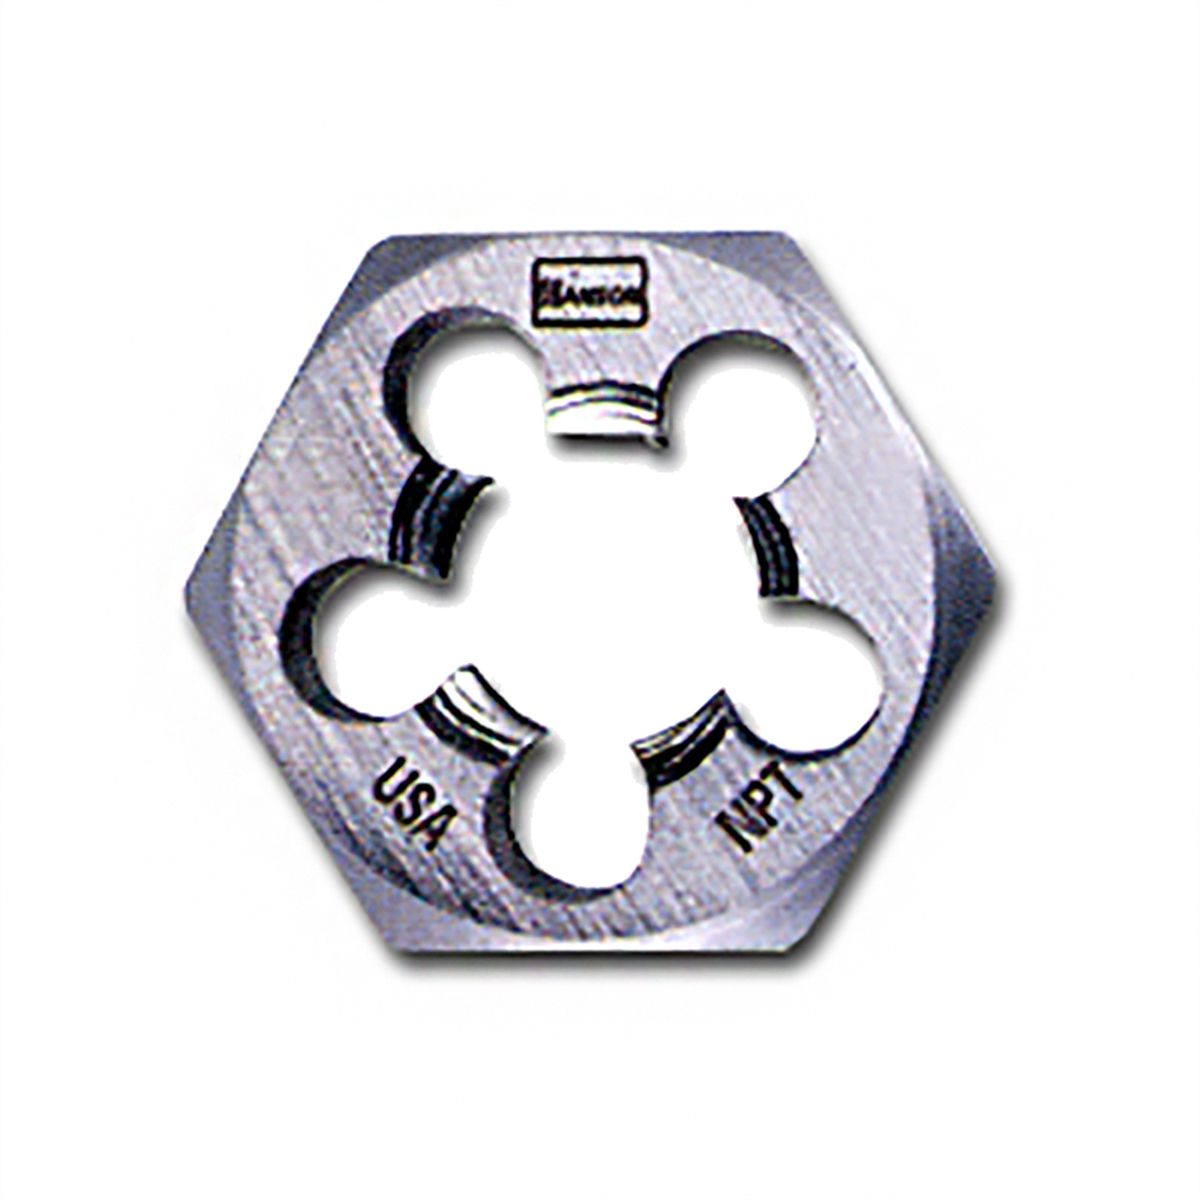 24 mm - 1.5 - Right-hand Re-threading Hexagon Metric Die